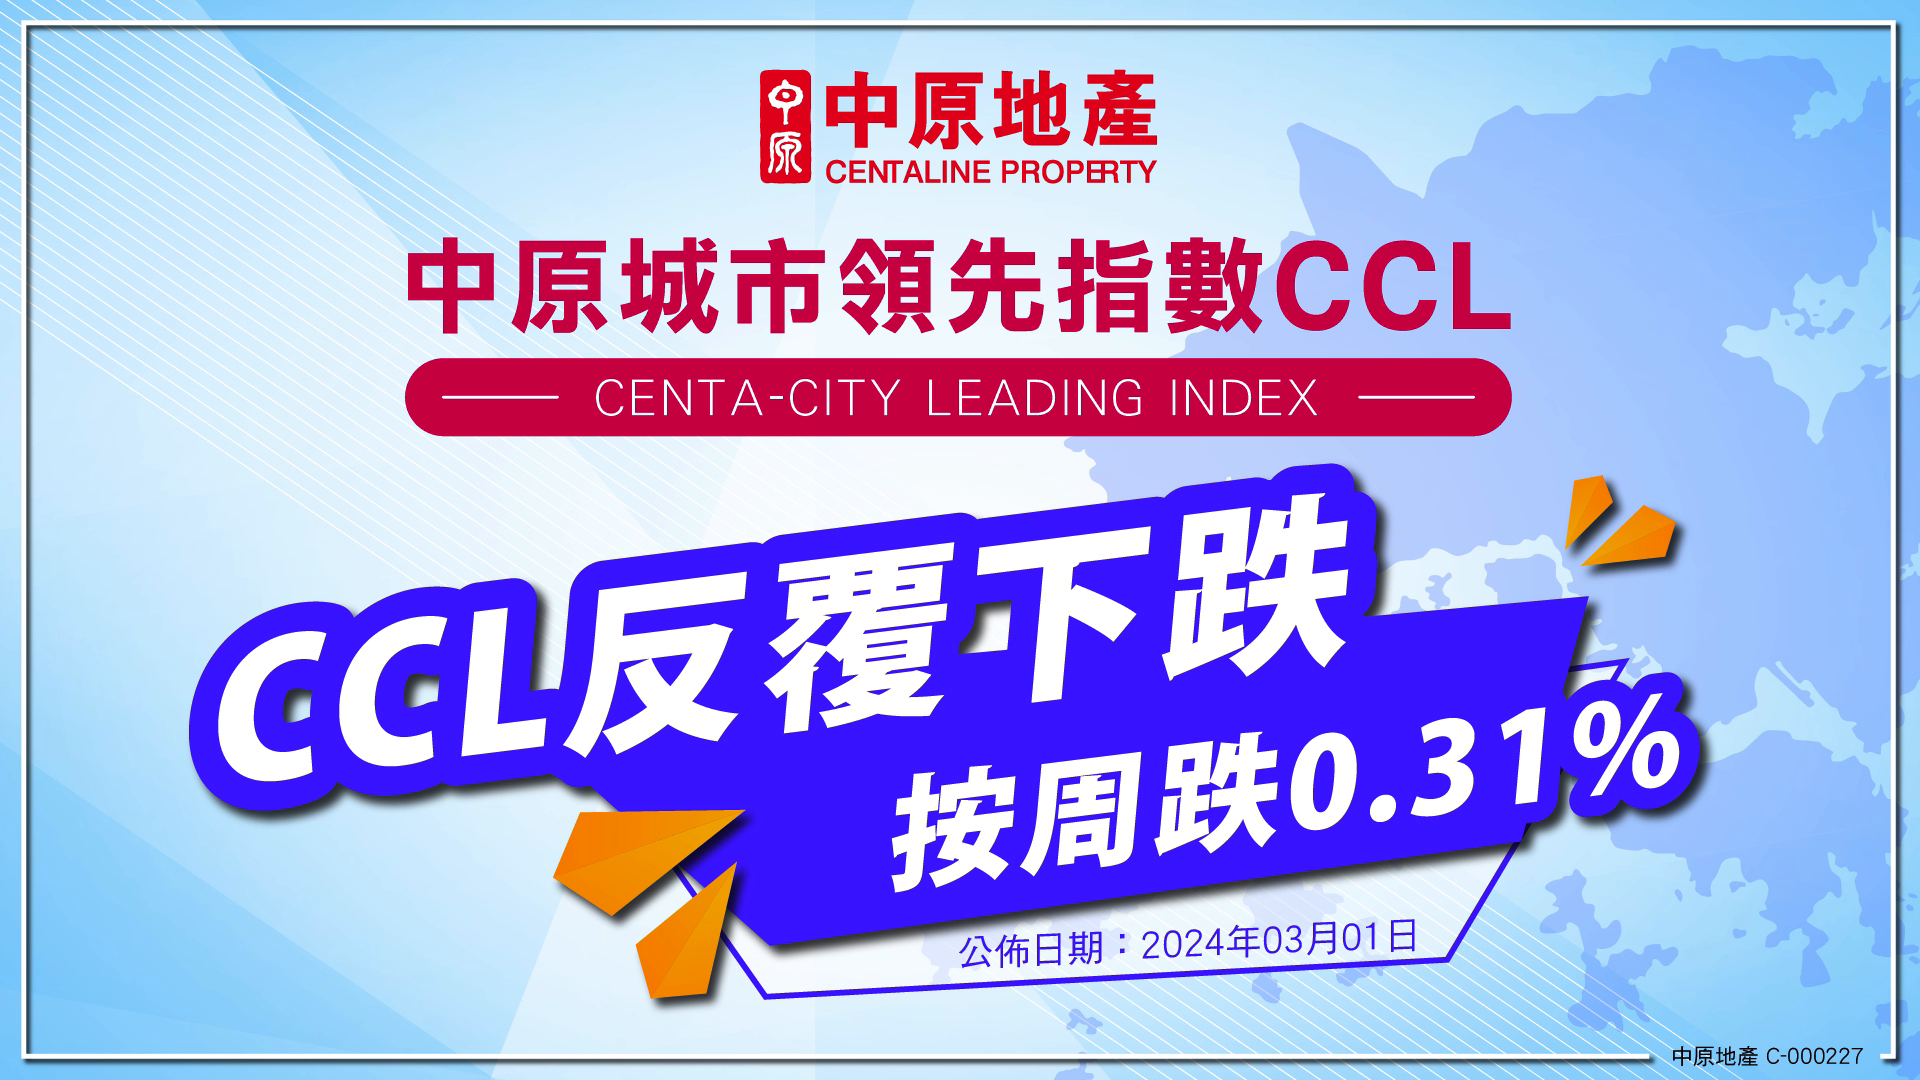 CCL反覆下跌 按周跌0.31%